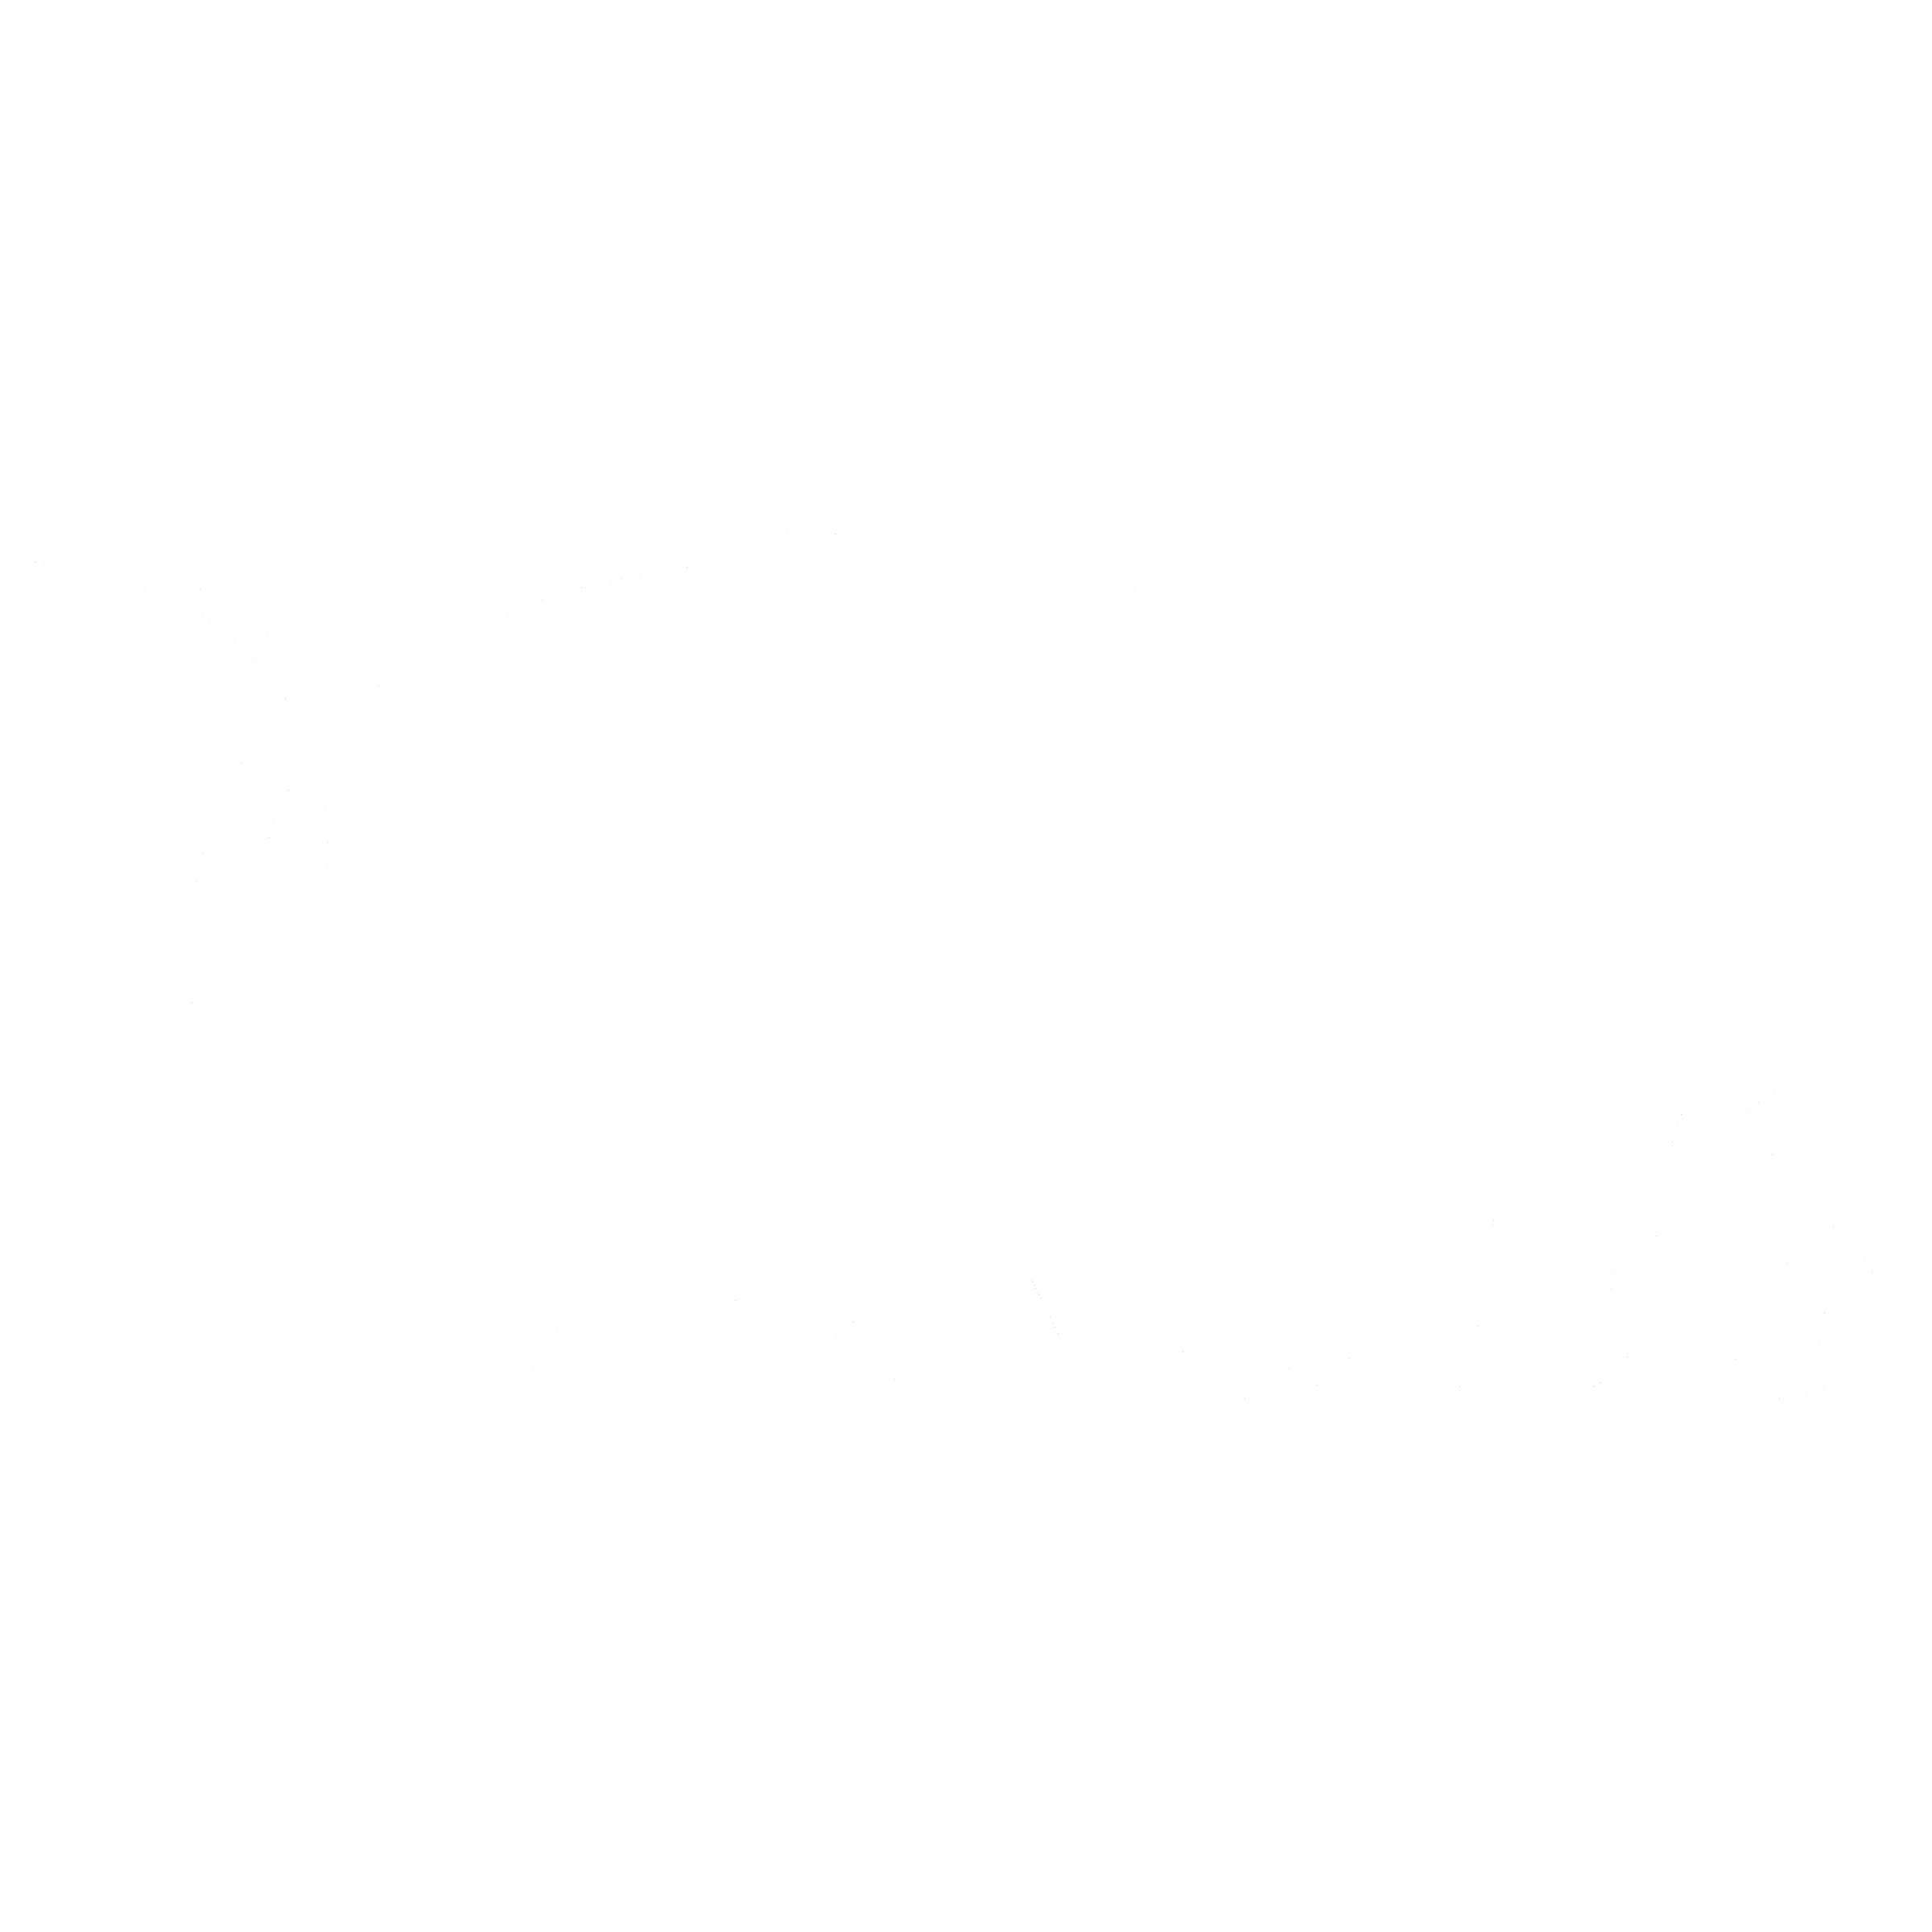 Sensus Logo - Sensus Logo PNG Transparent & SVG Vector - Freebie Supply